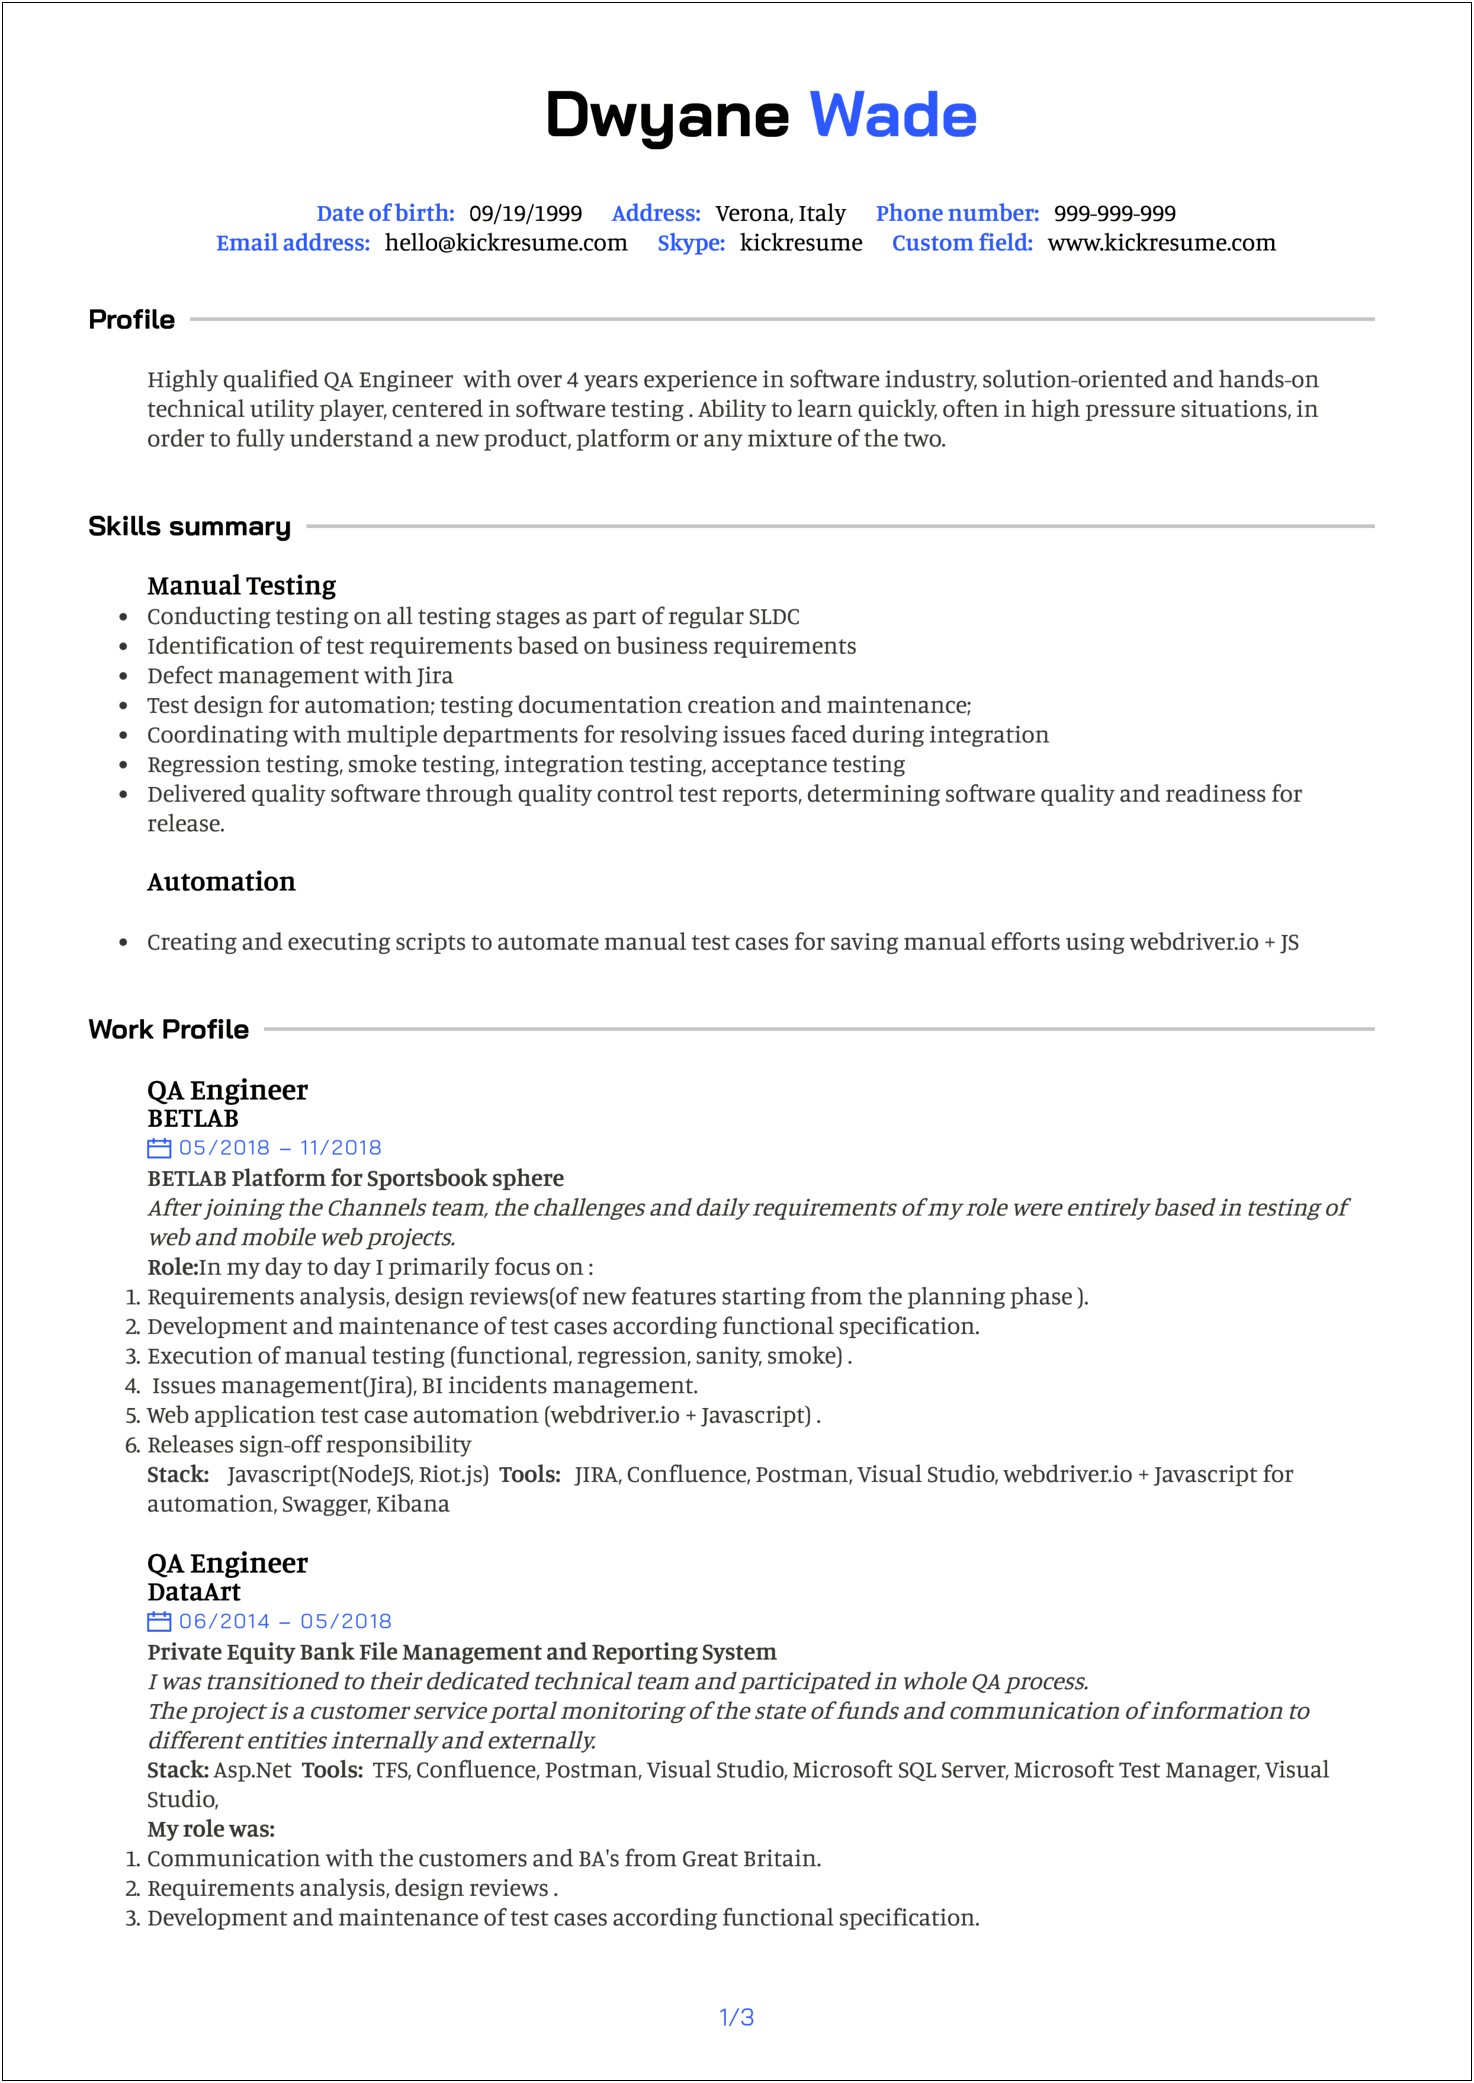 Resume Job Description For Engineer